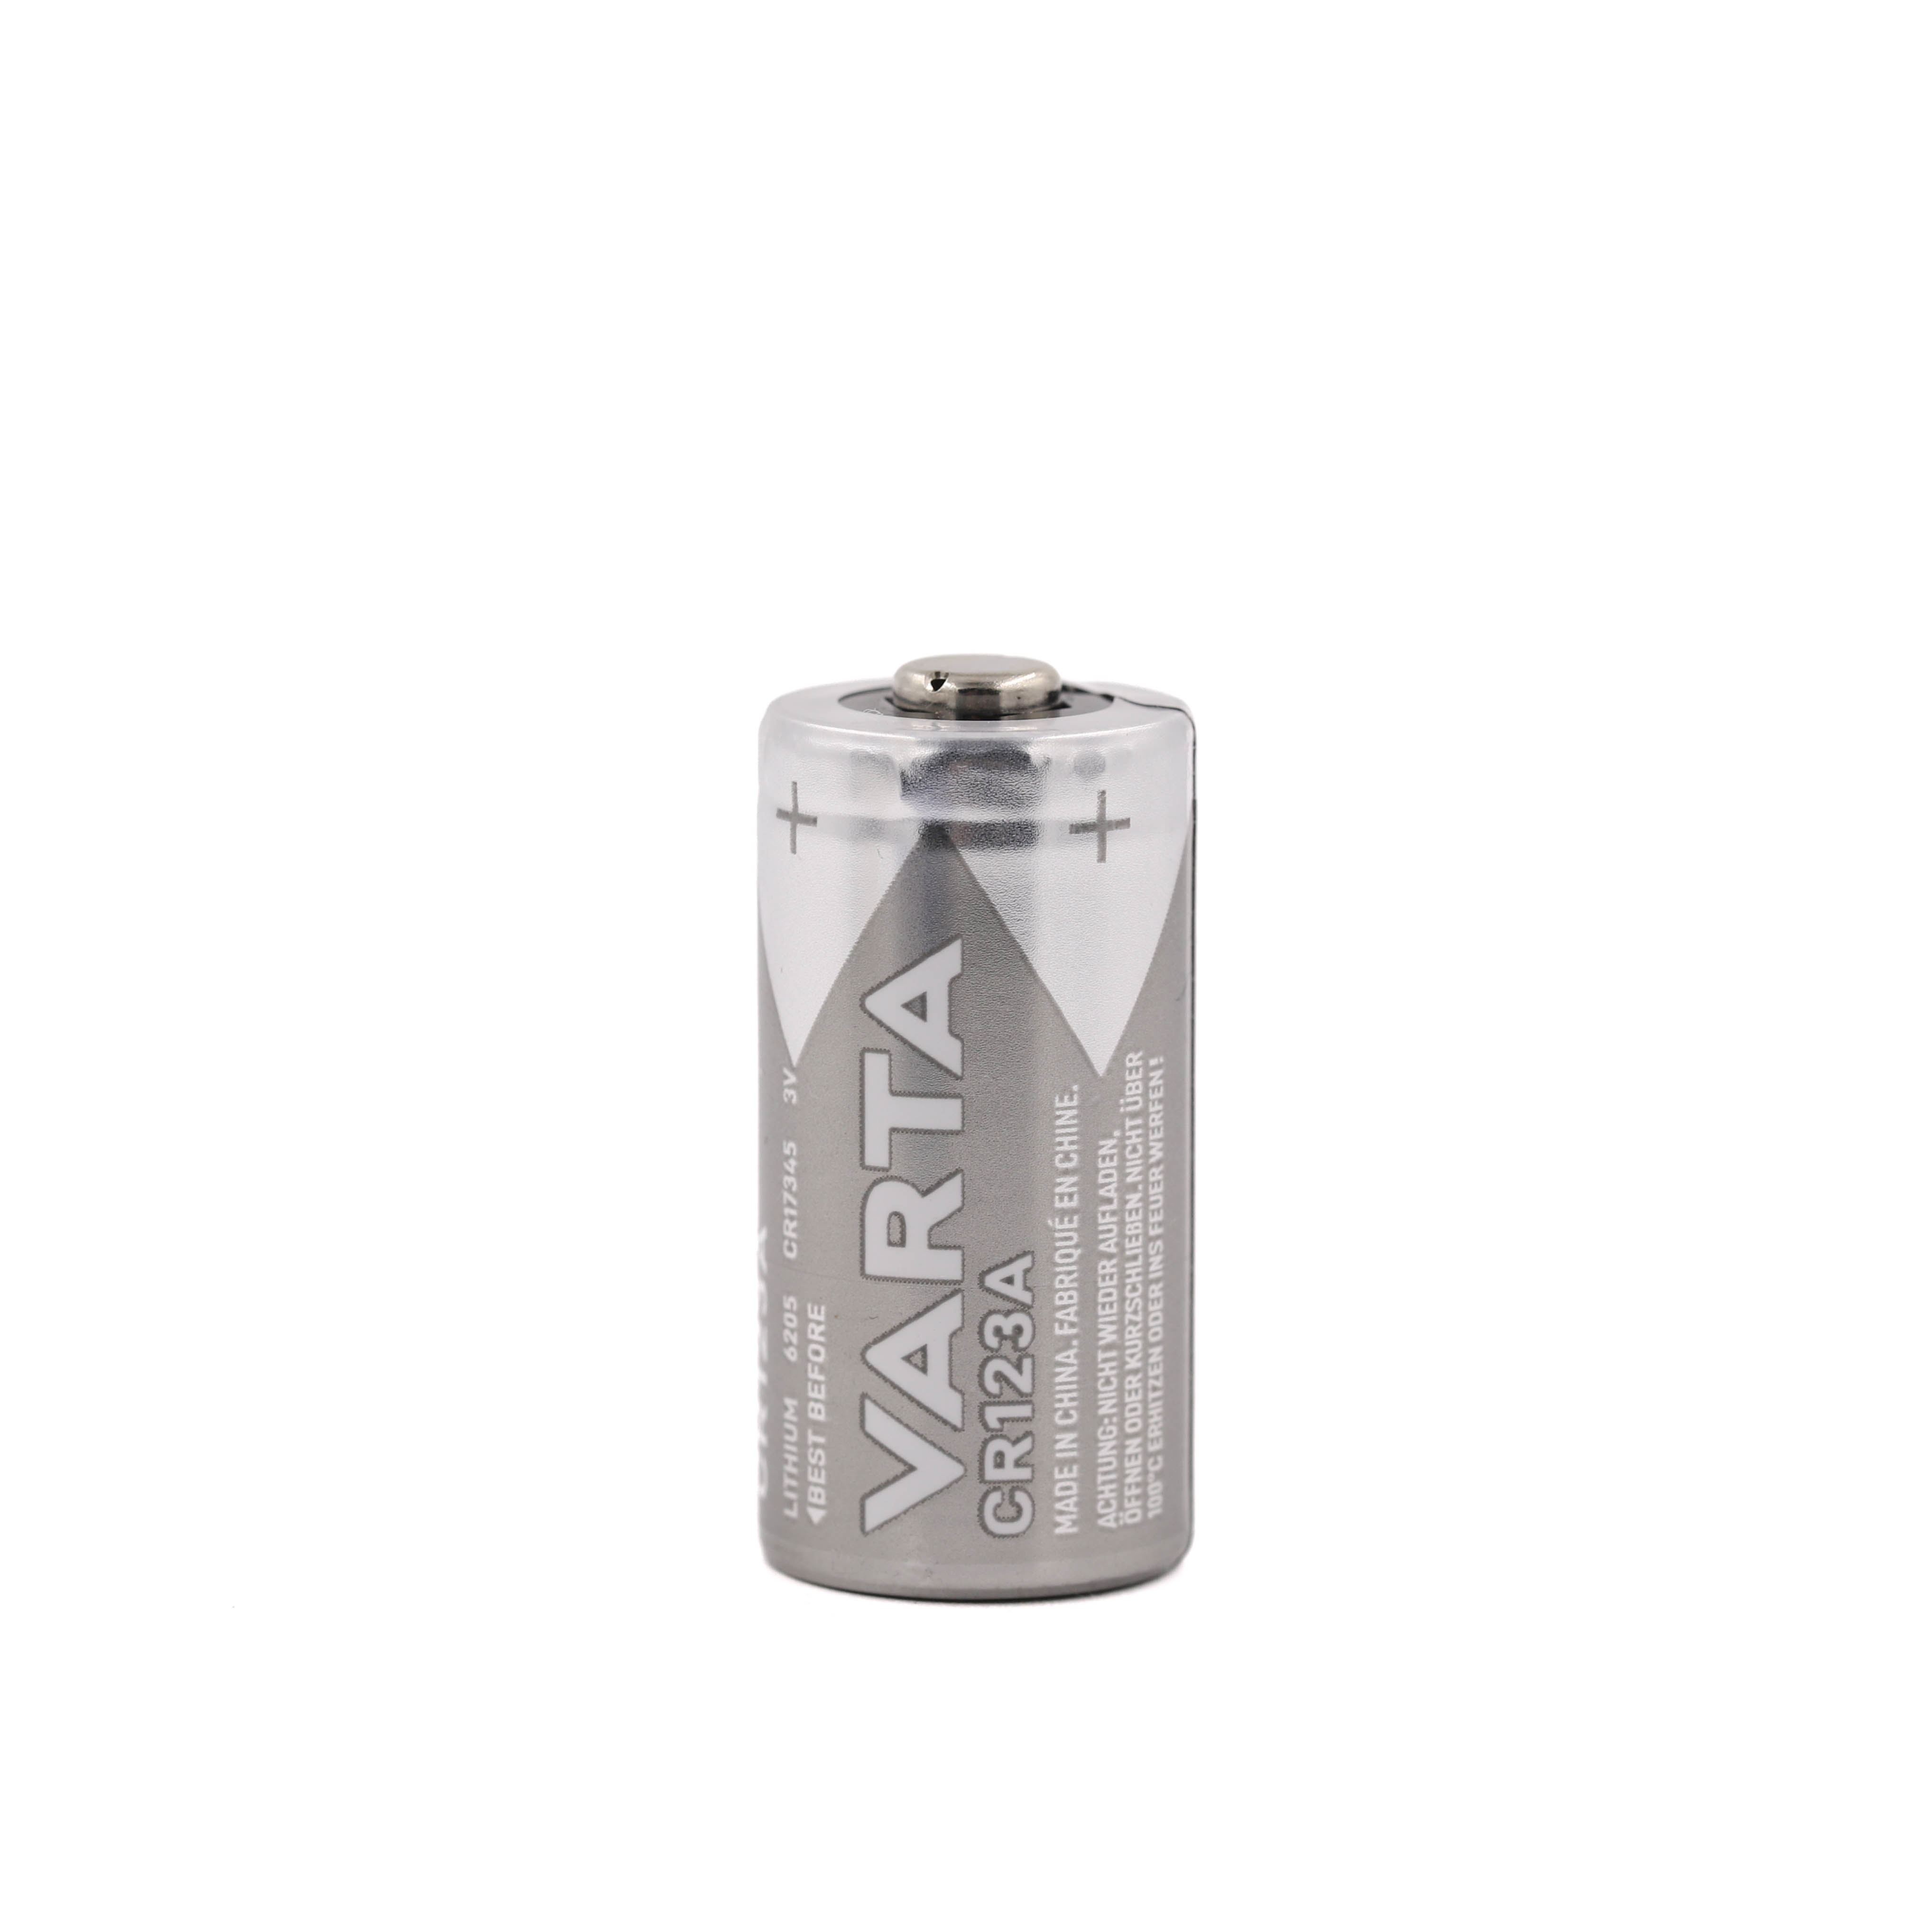 VARTA Lithium-Batterie SET 3V CR123A